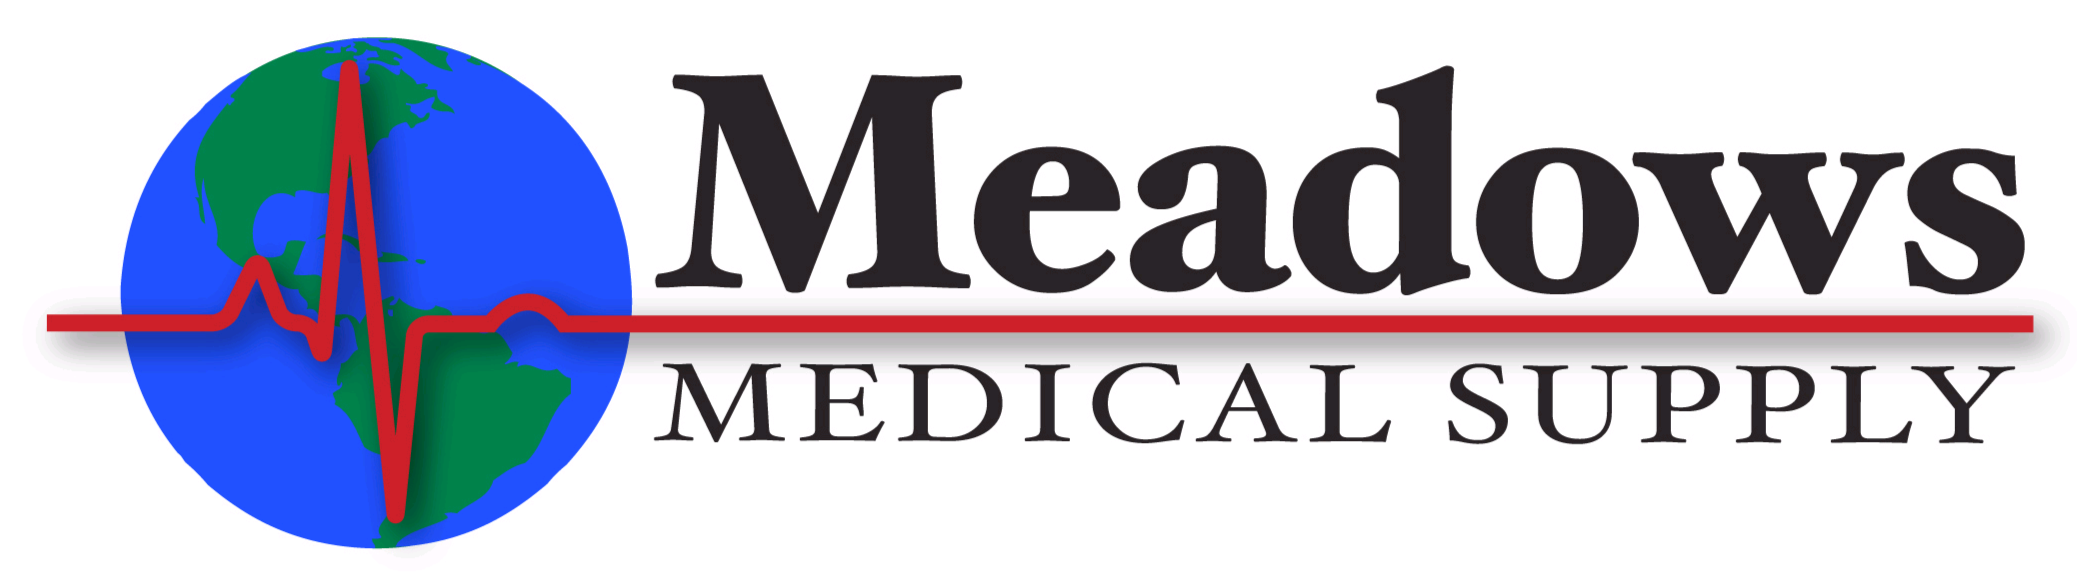 Meadows Medical